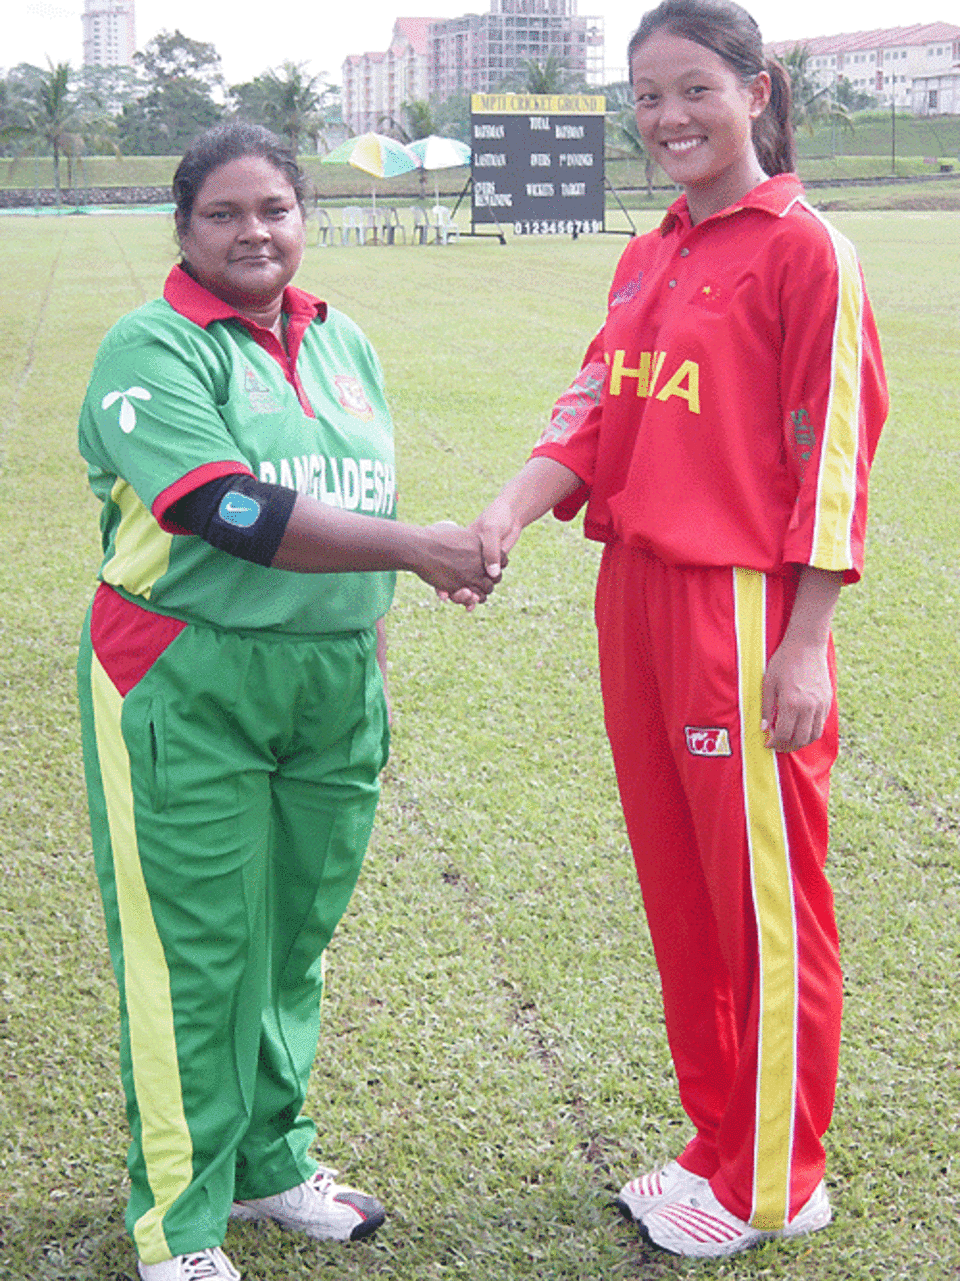 Bangladesh captain Tajkia Akhter and China captain Mei Chin Hua shake hands before their game, Bangladesh women v China women, ACC tournament, Johor, July 15, 2007